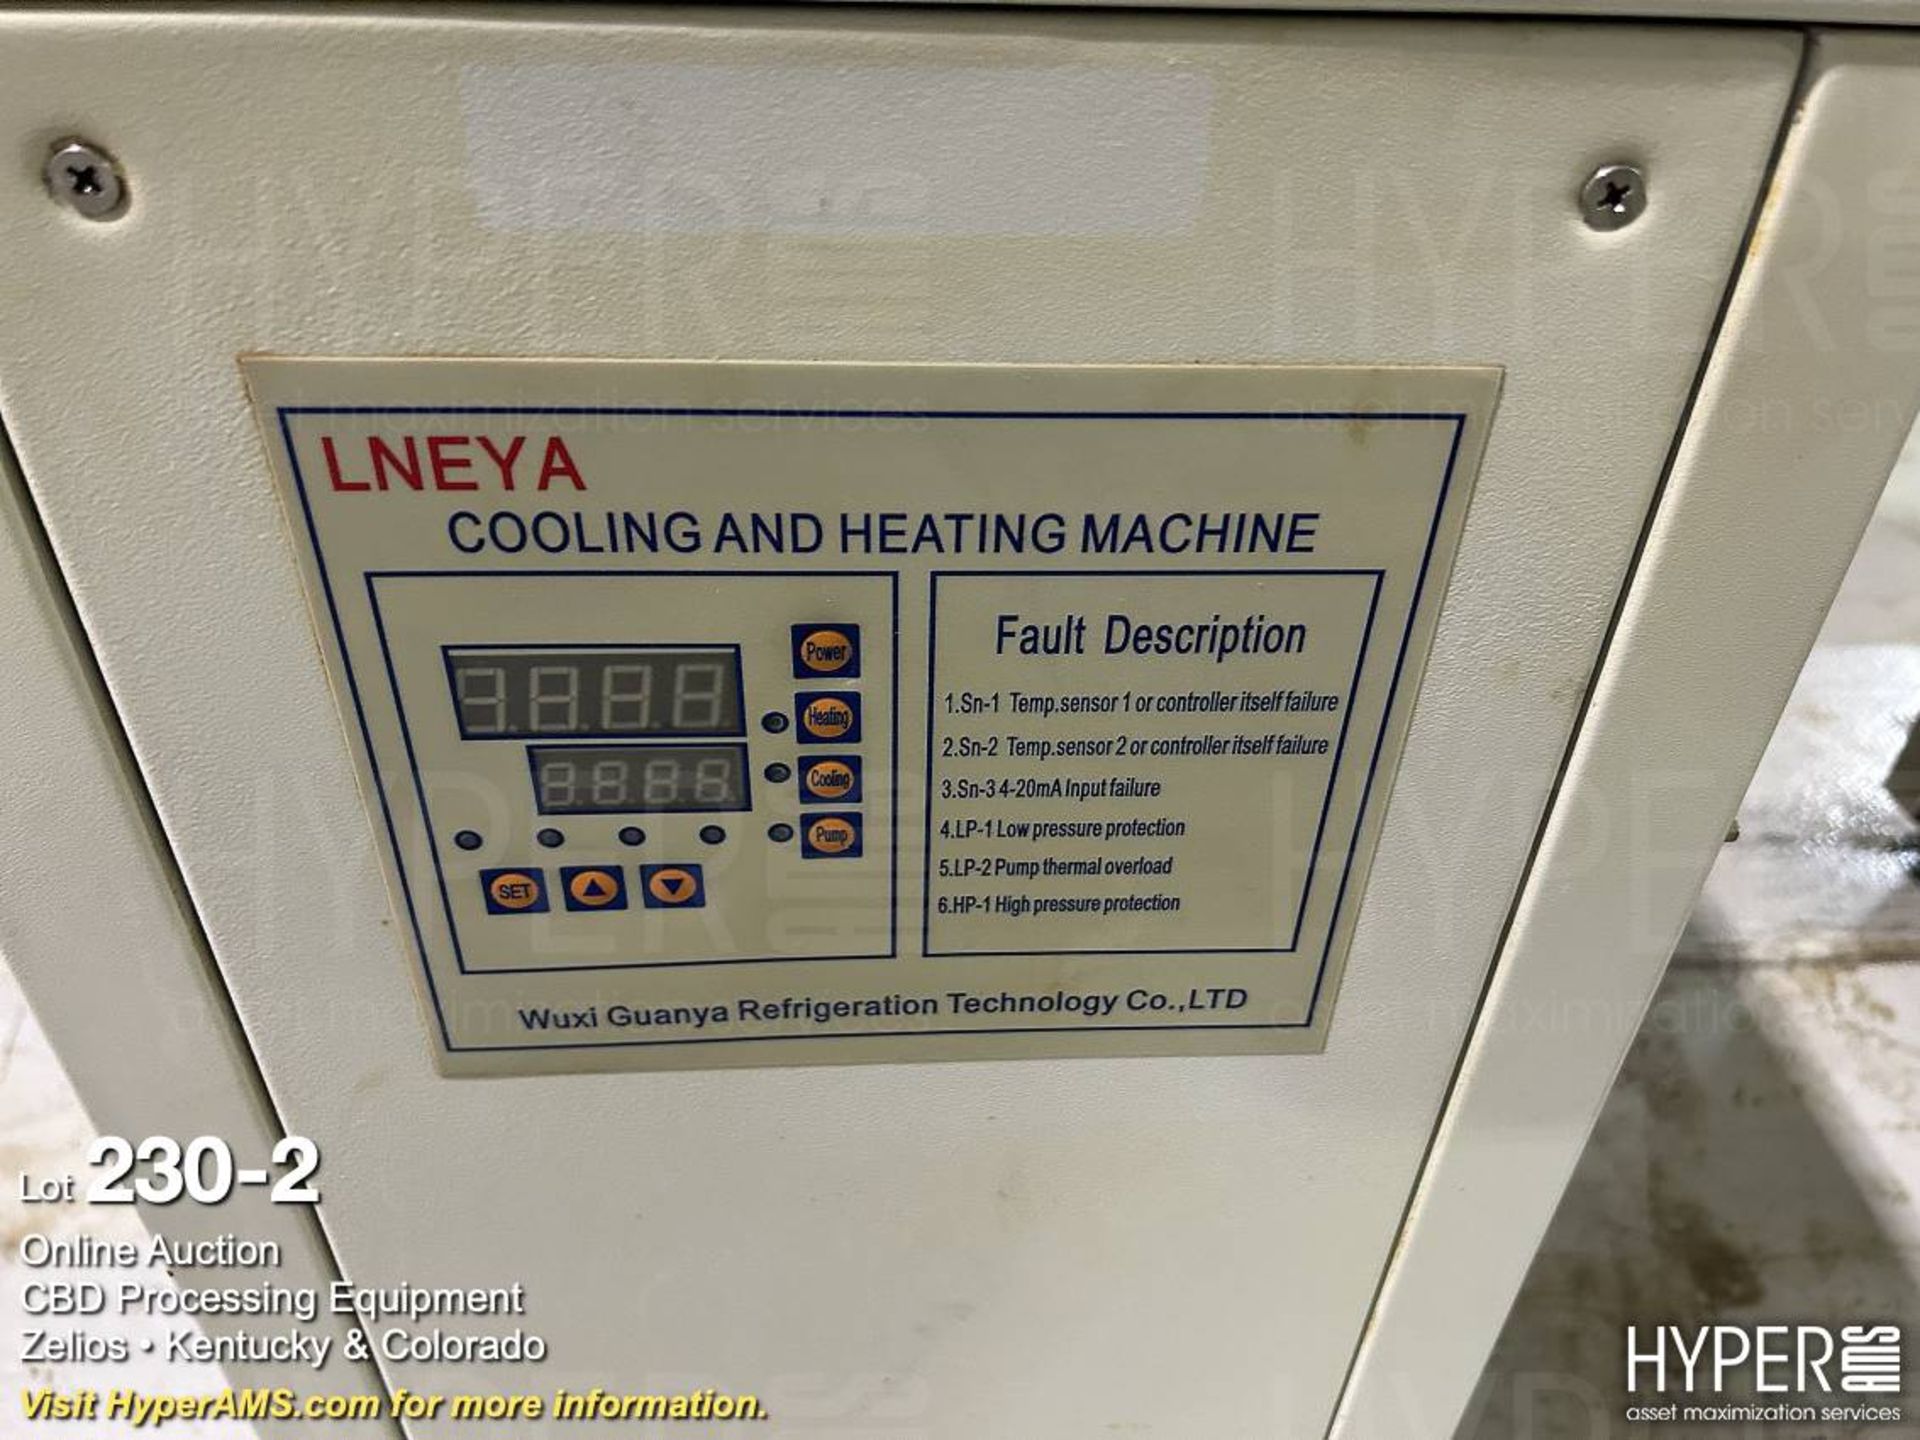 Lneya Model UC-182 Electric Chiller/Heater, S/n 81 - Image 2 of 4